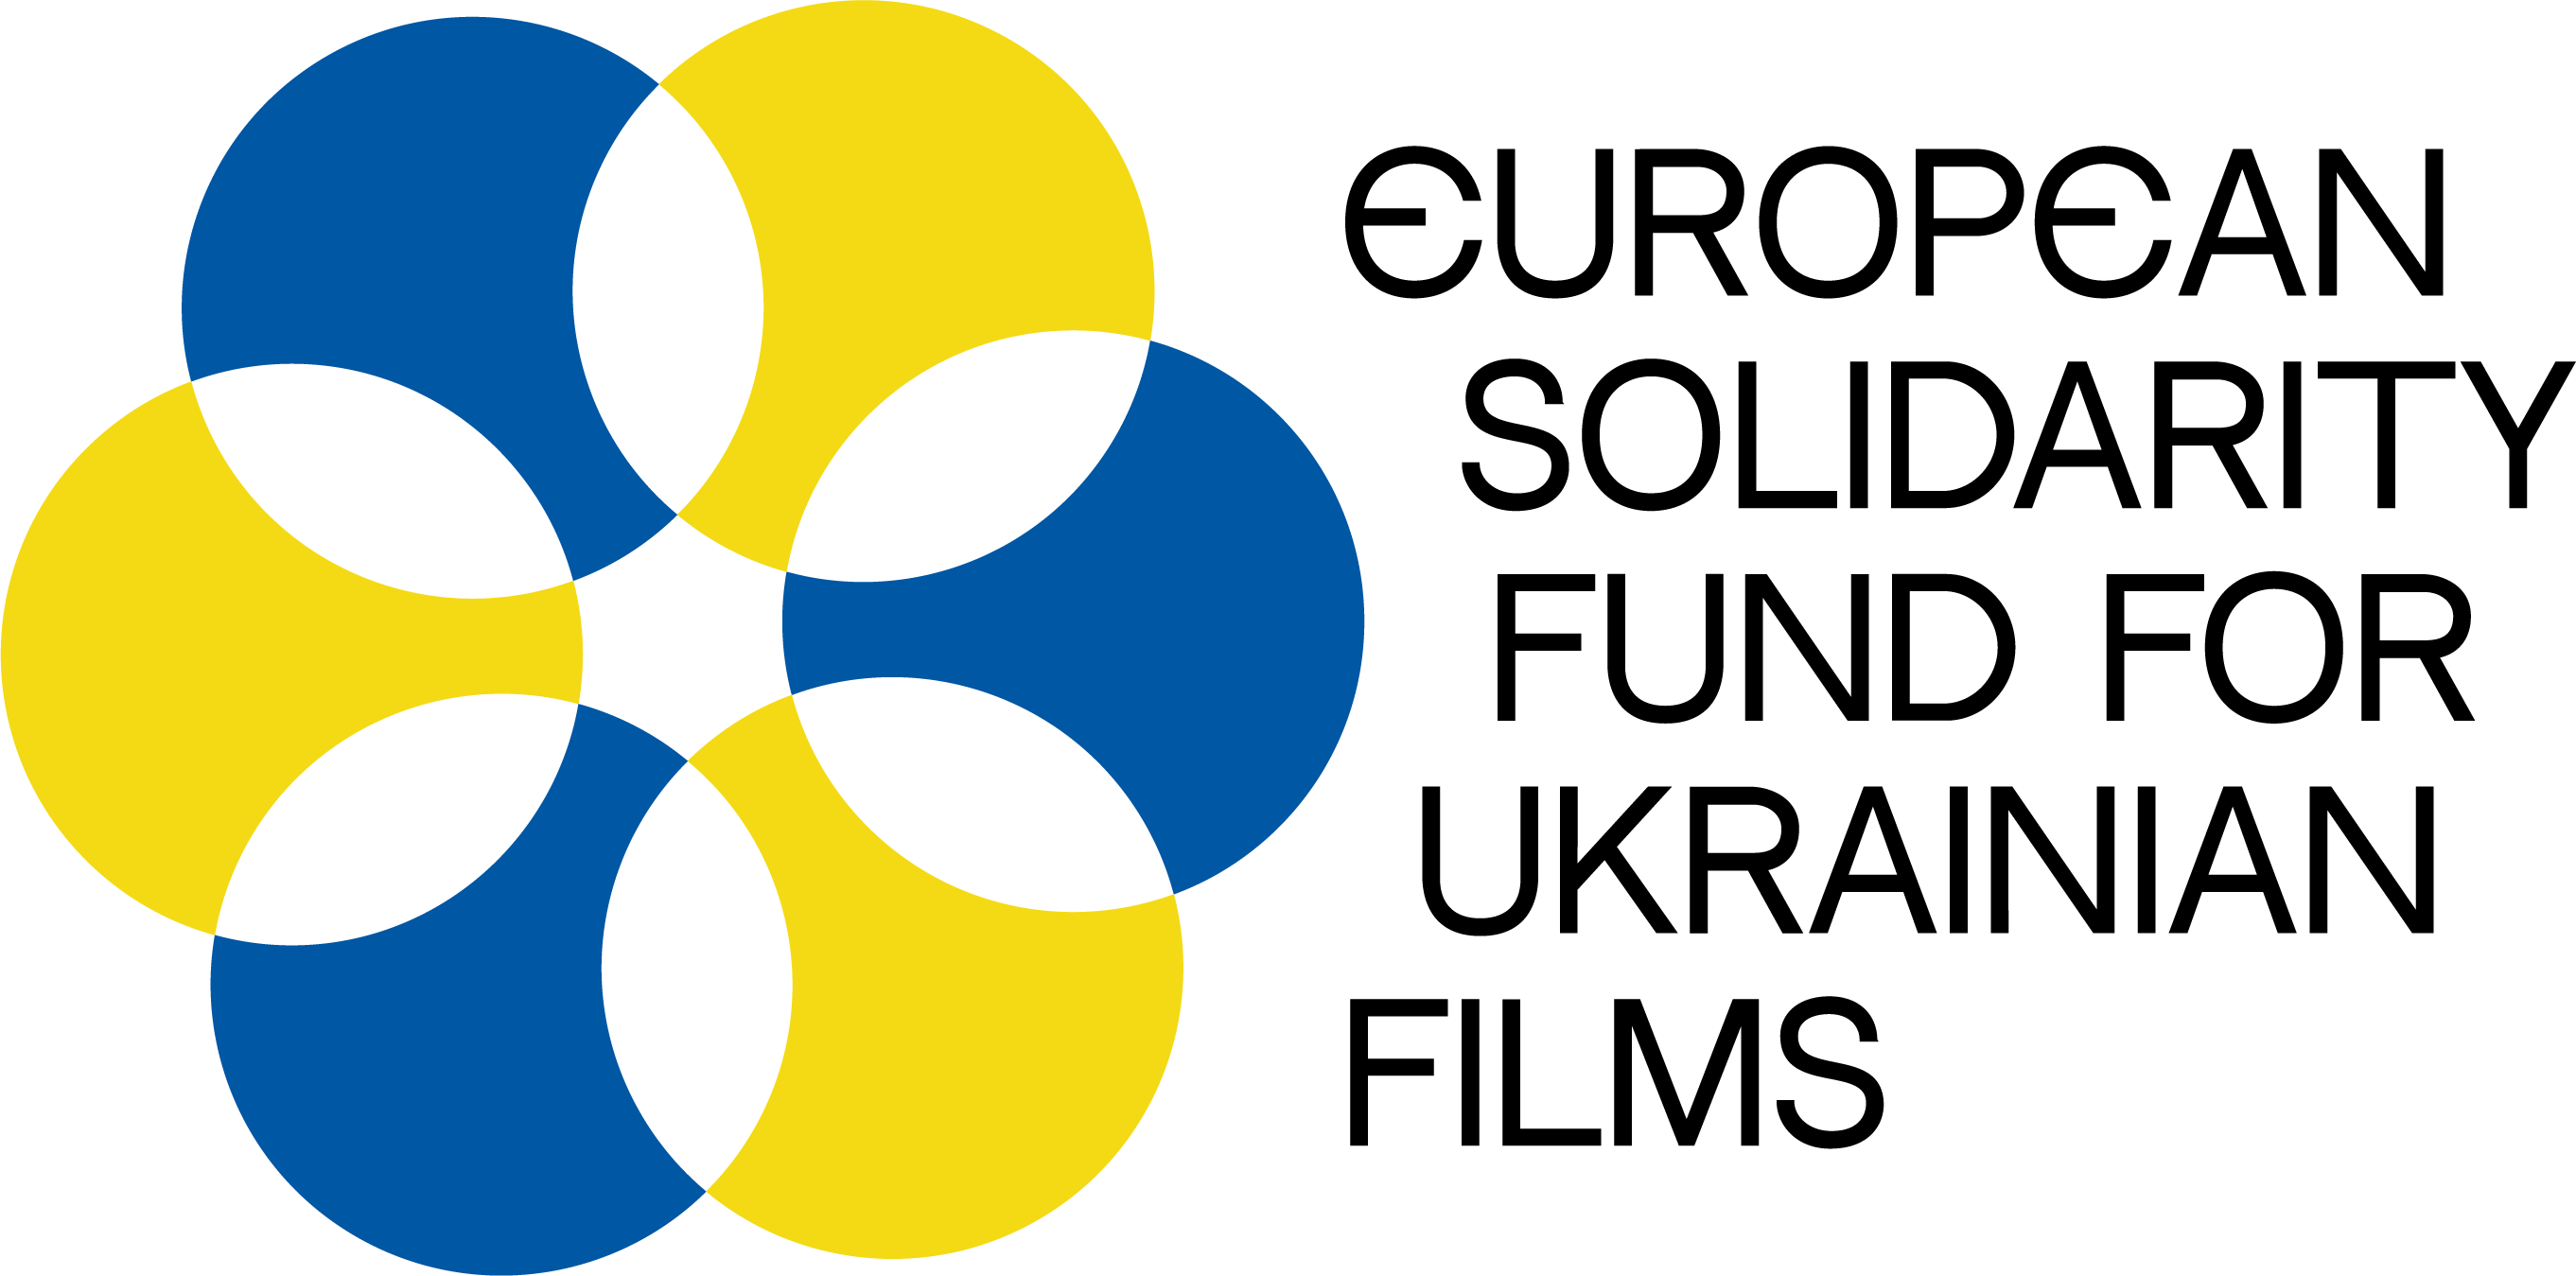 European Solidarity Fund for Ukrainian Films logo.